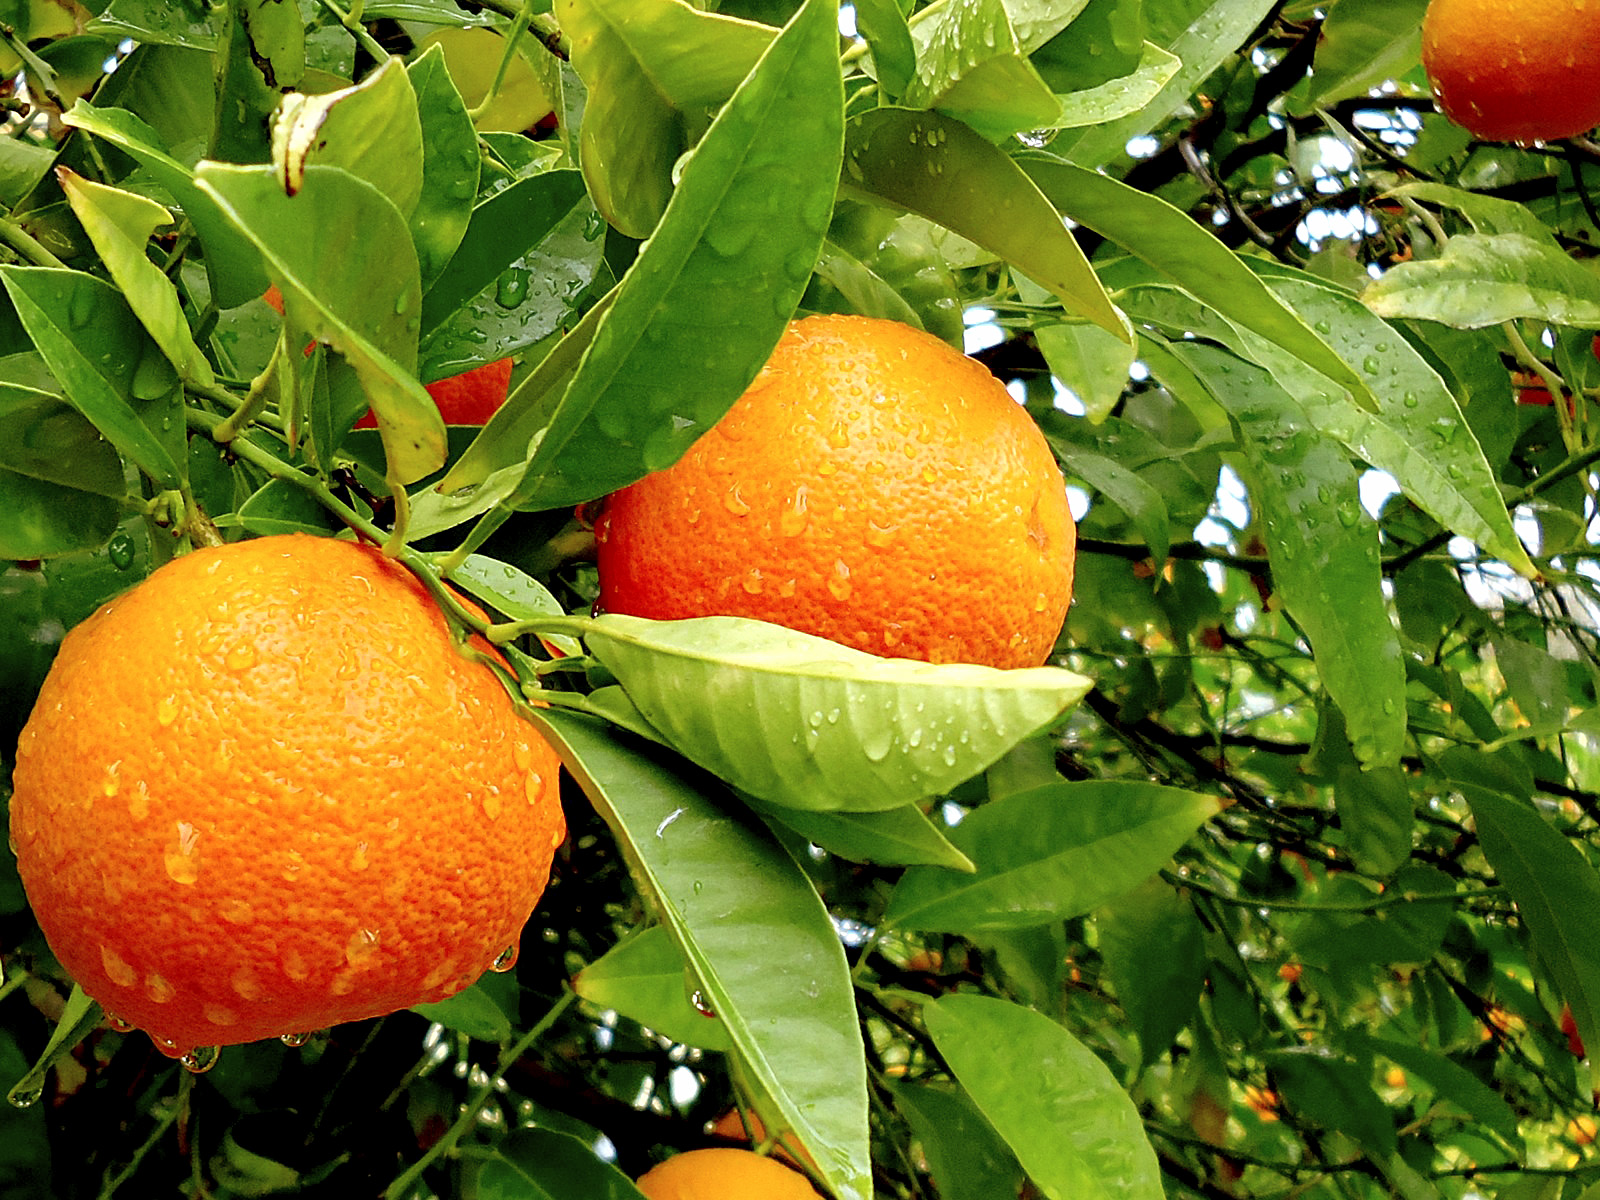 Plant profile - citrus trees - The English Garden